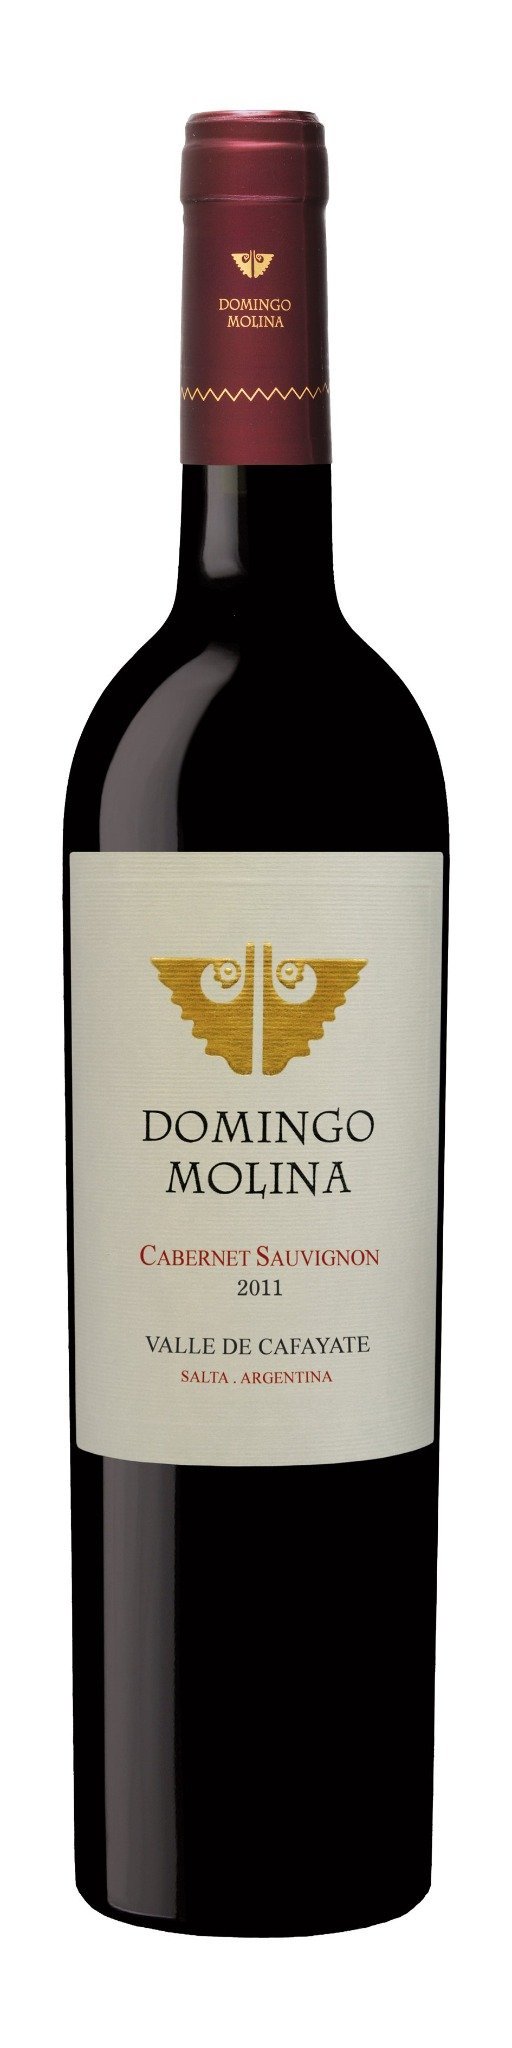 Domingo Molina  Cabernet Sauvignon - Mi-bodeguita.com